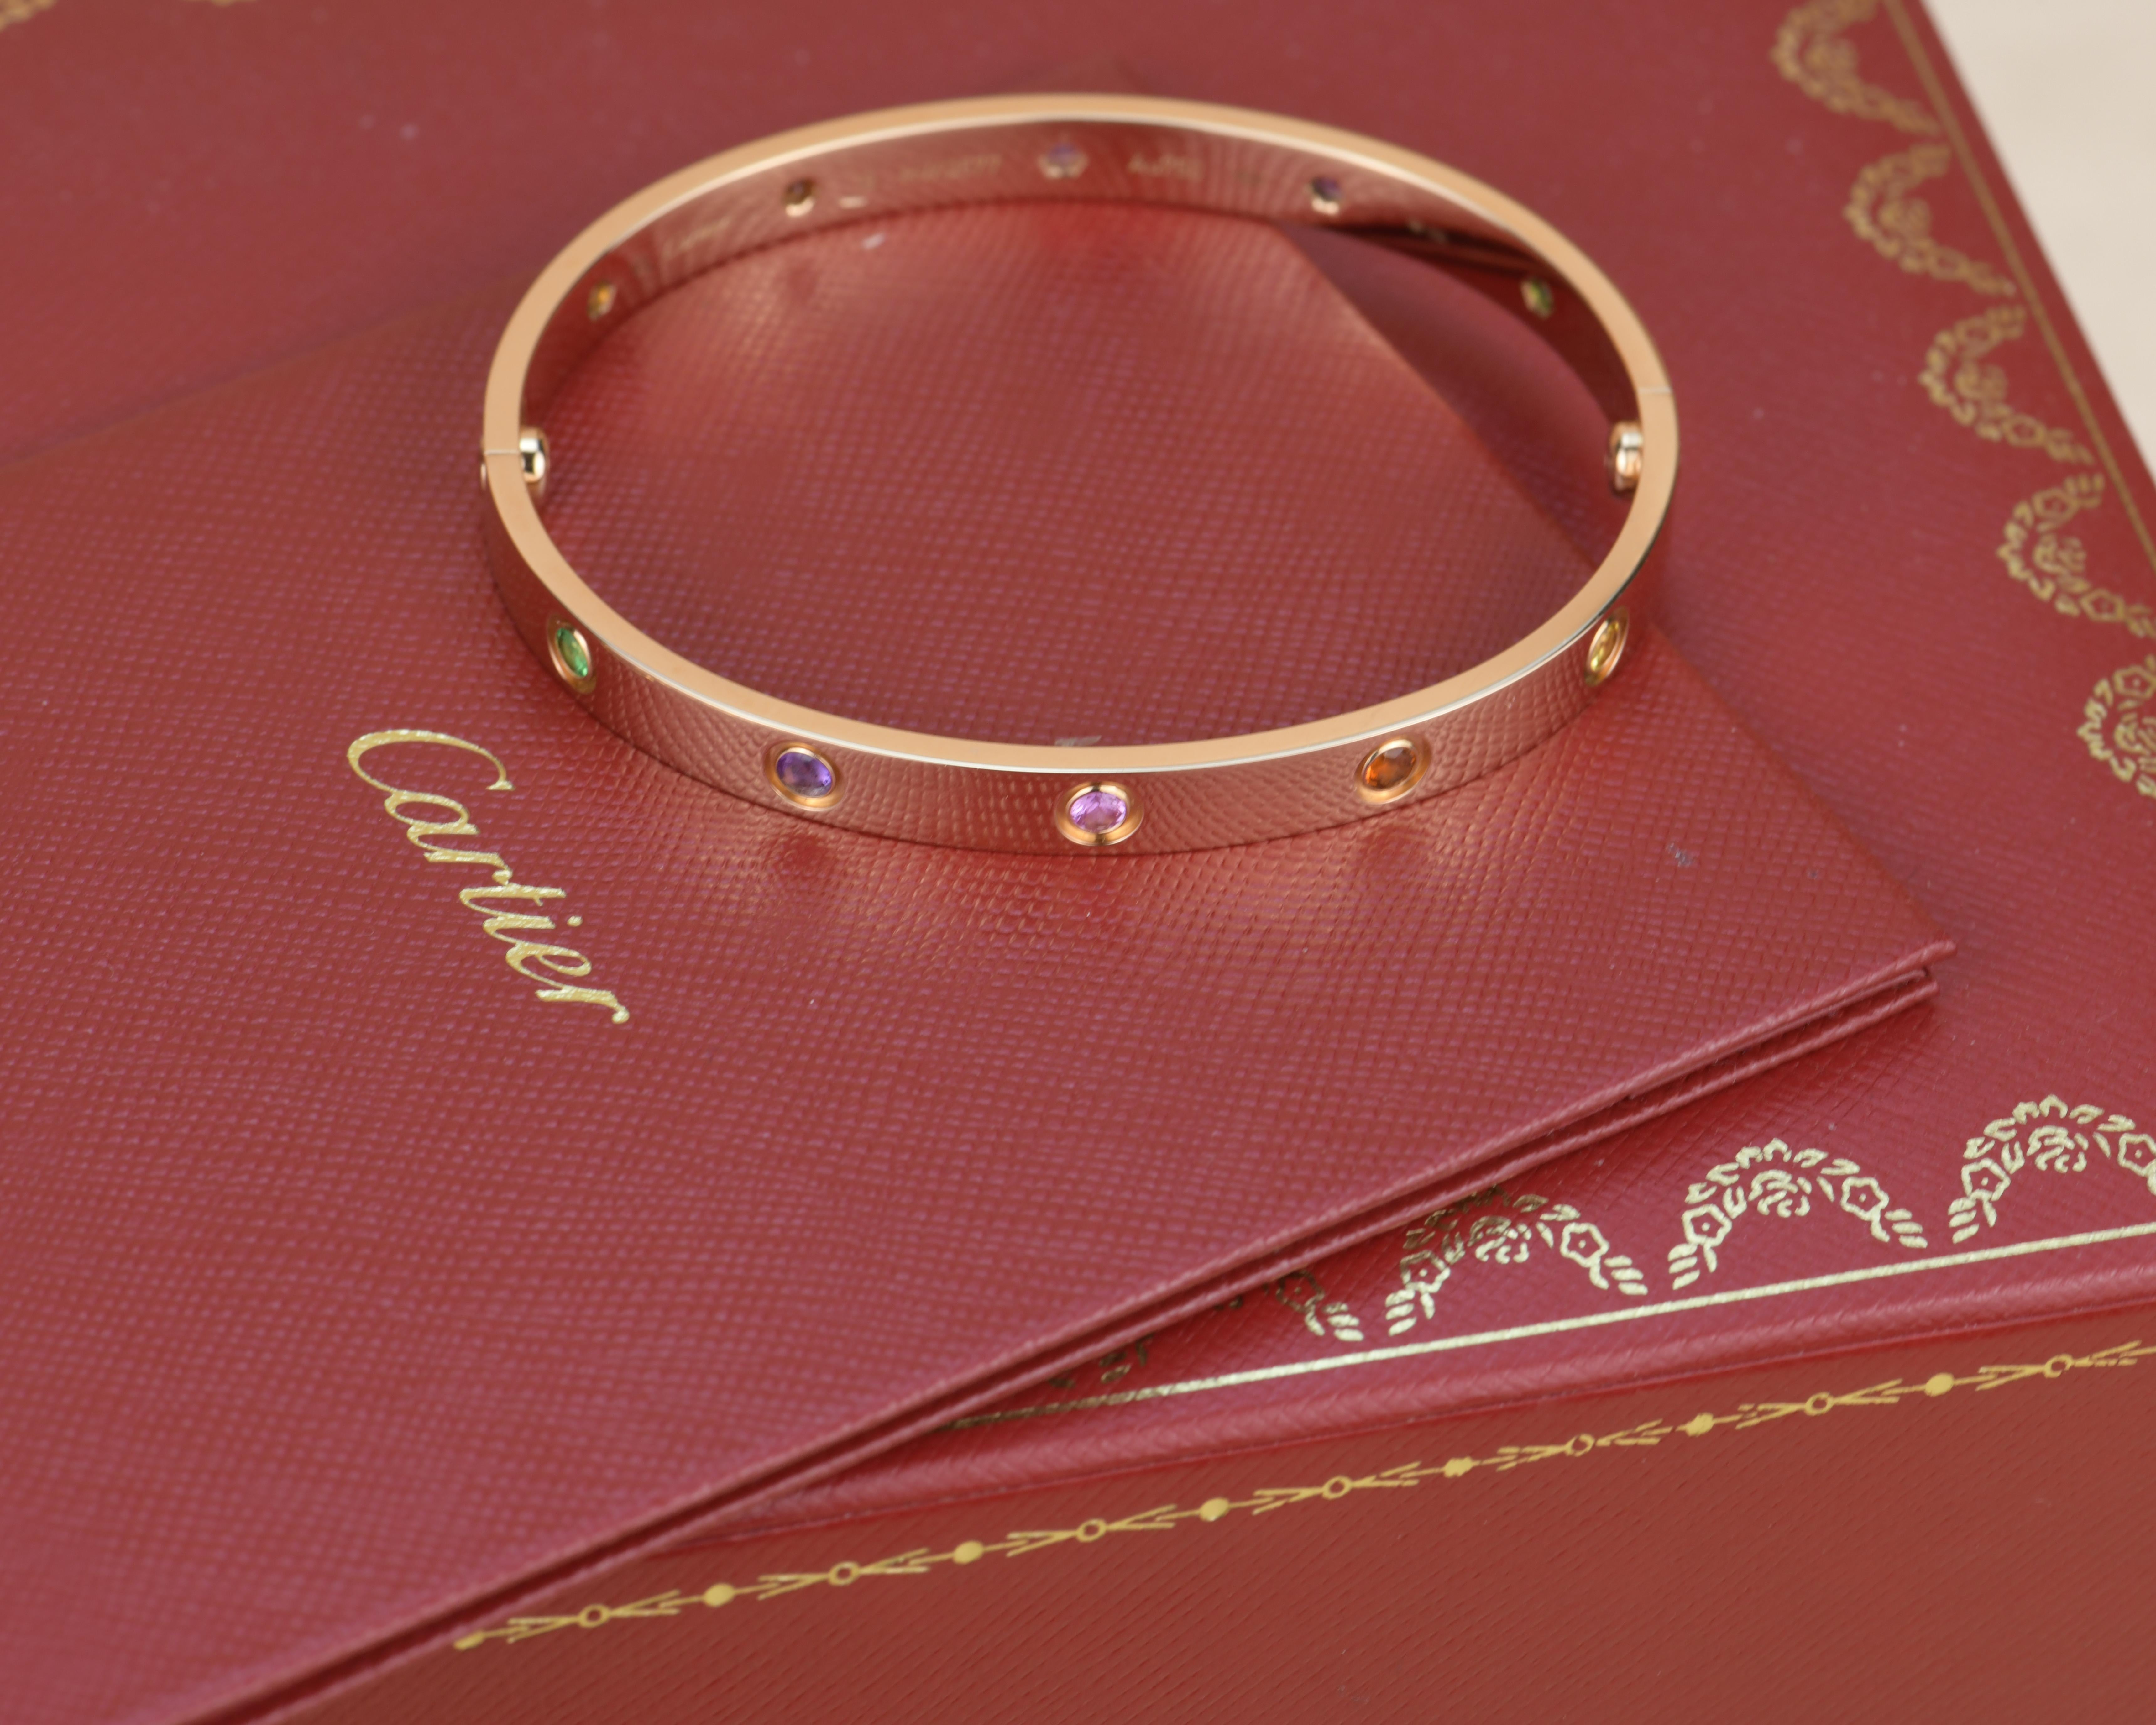 LOVE bracelet, 18K rose gold, set with 2 pink sapphires, 2 yellow sapphires, 2 green garnets, 2 orange garnets, and 2 amethysts. 
_____________________________________________________________
Dandelion Antiques Code AT-1406
Brand Cartier
Model